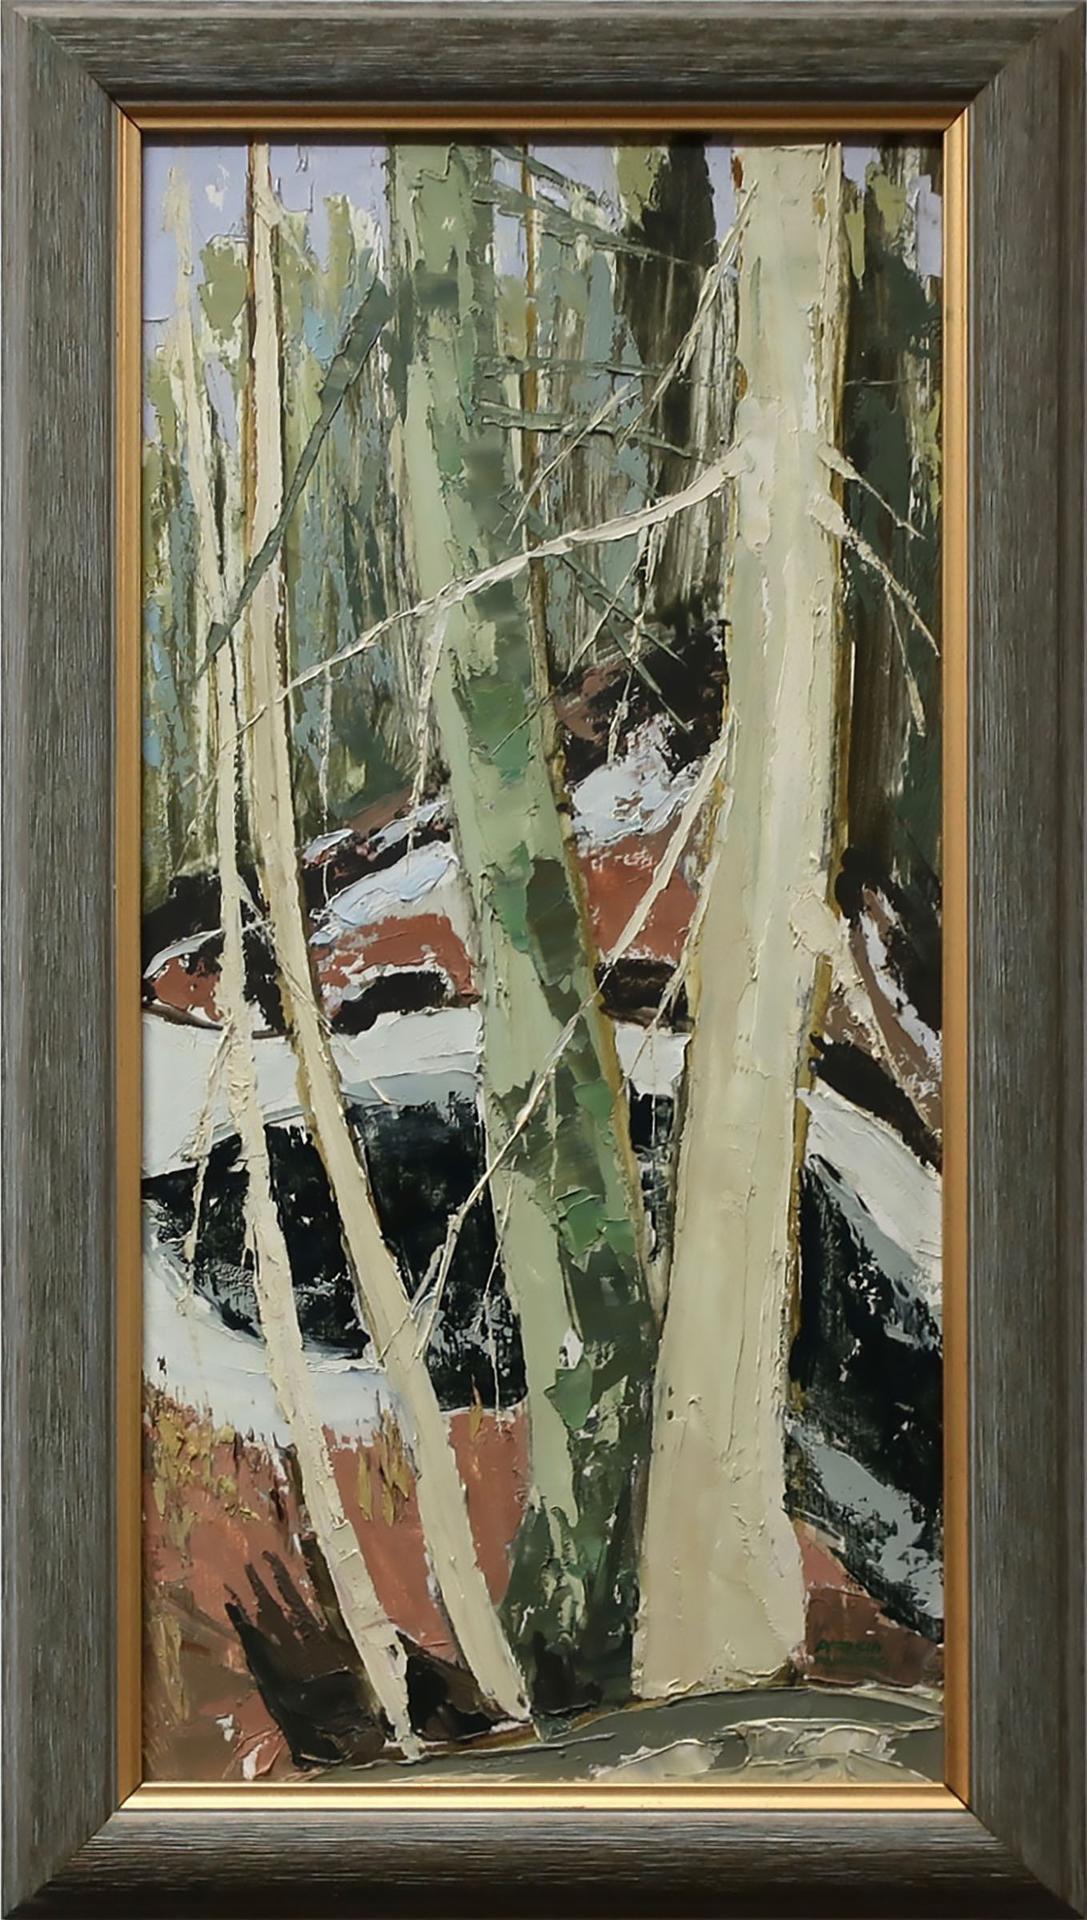 Patricia (Pat) Mary Fairhead (1927) - Untitled (Woodland Study)